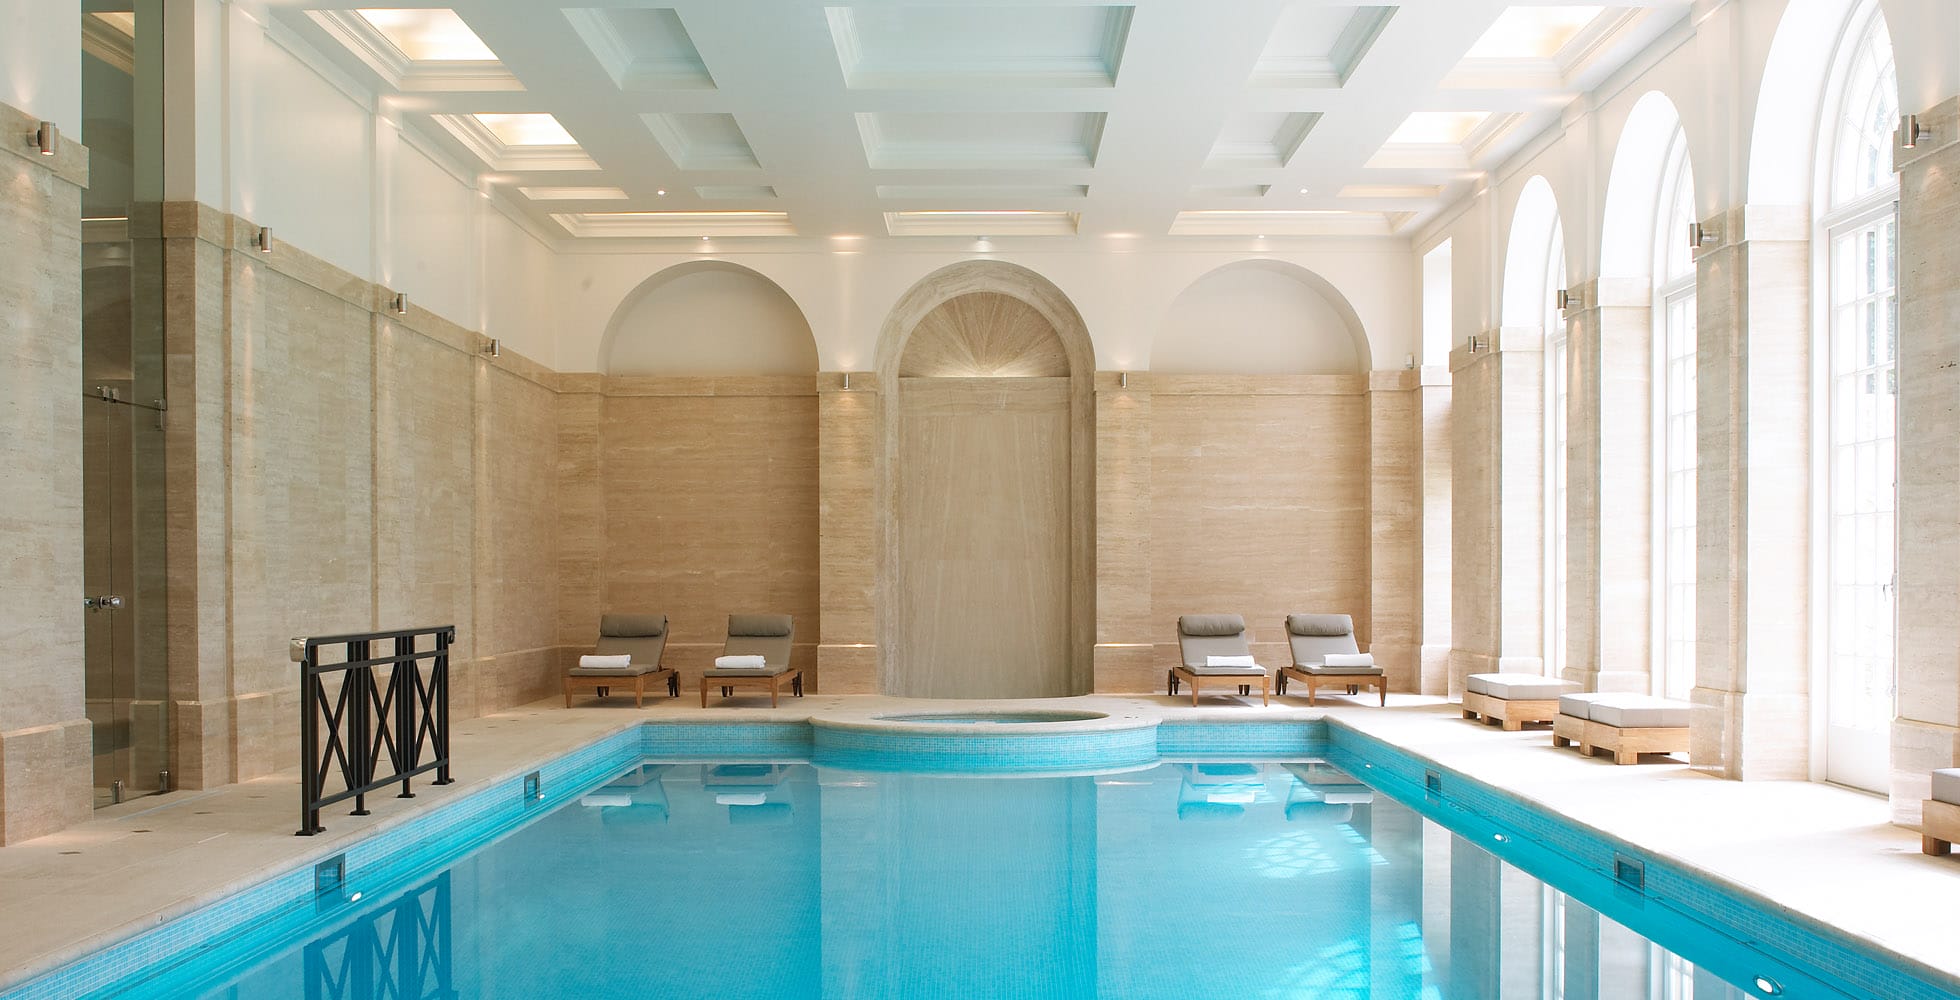 John Evans Design | Indoor Pools | Blog | Leisure Design | Swimming pool design